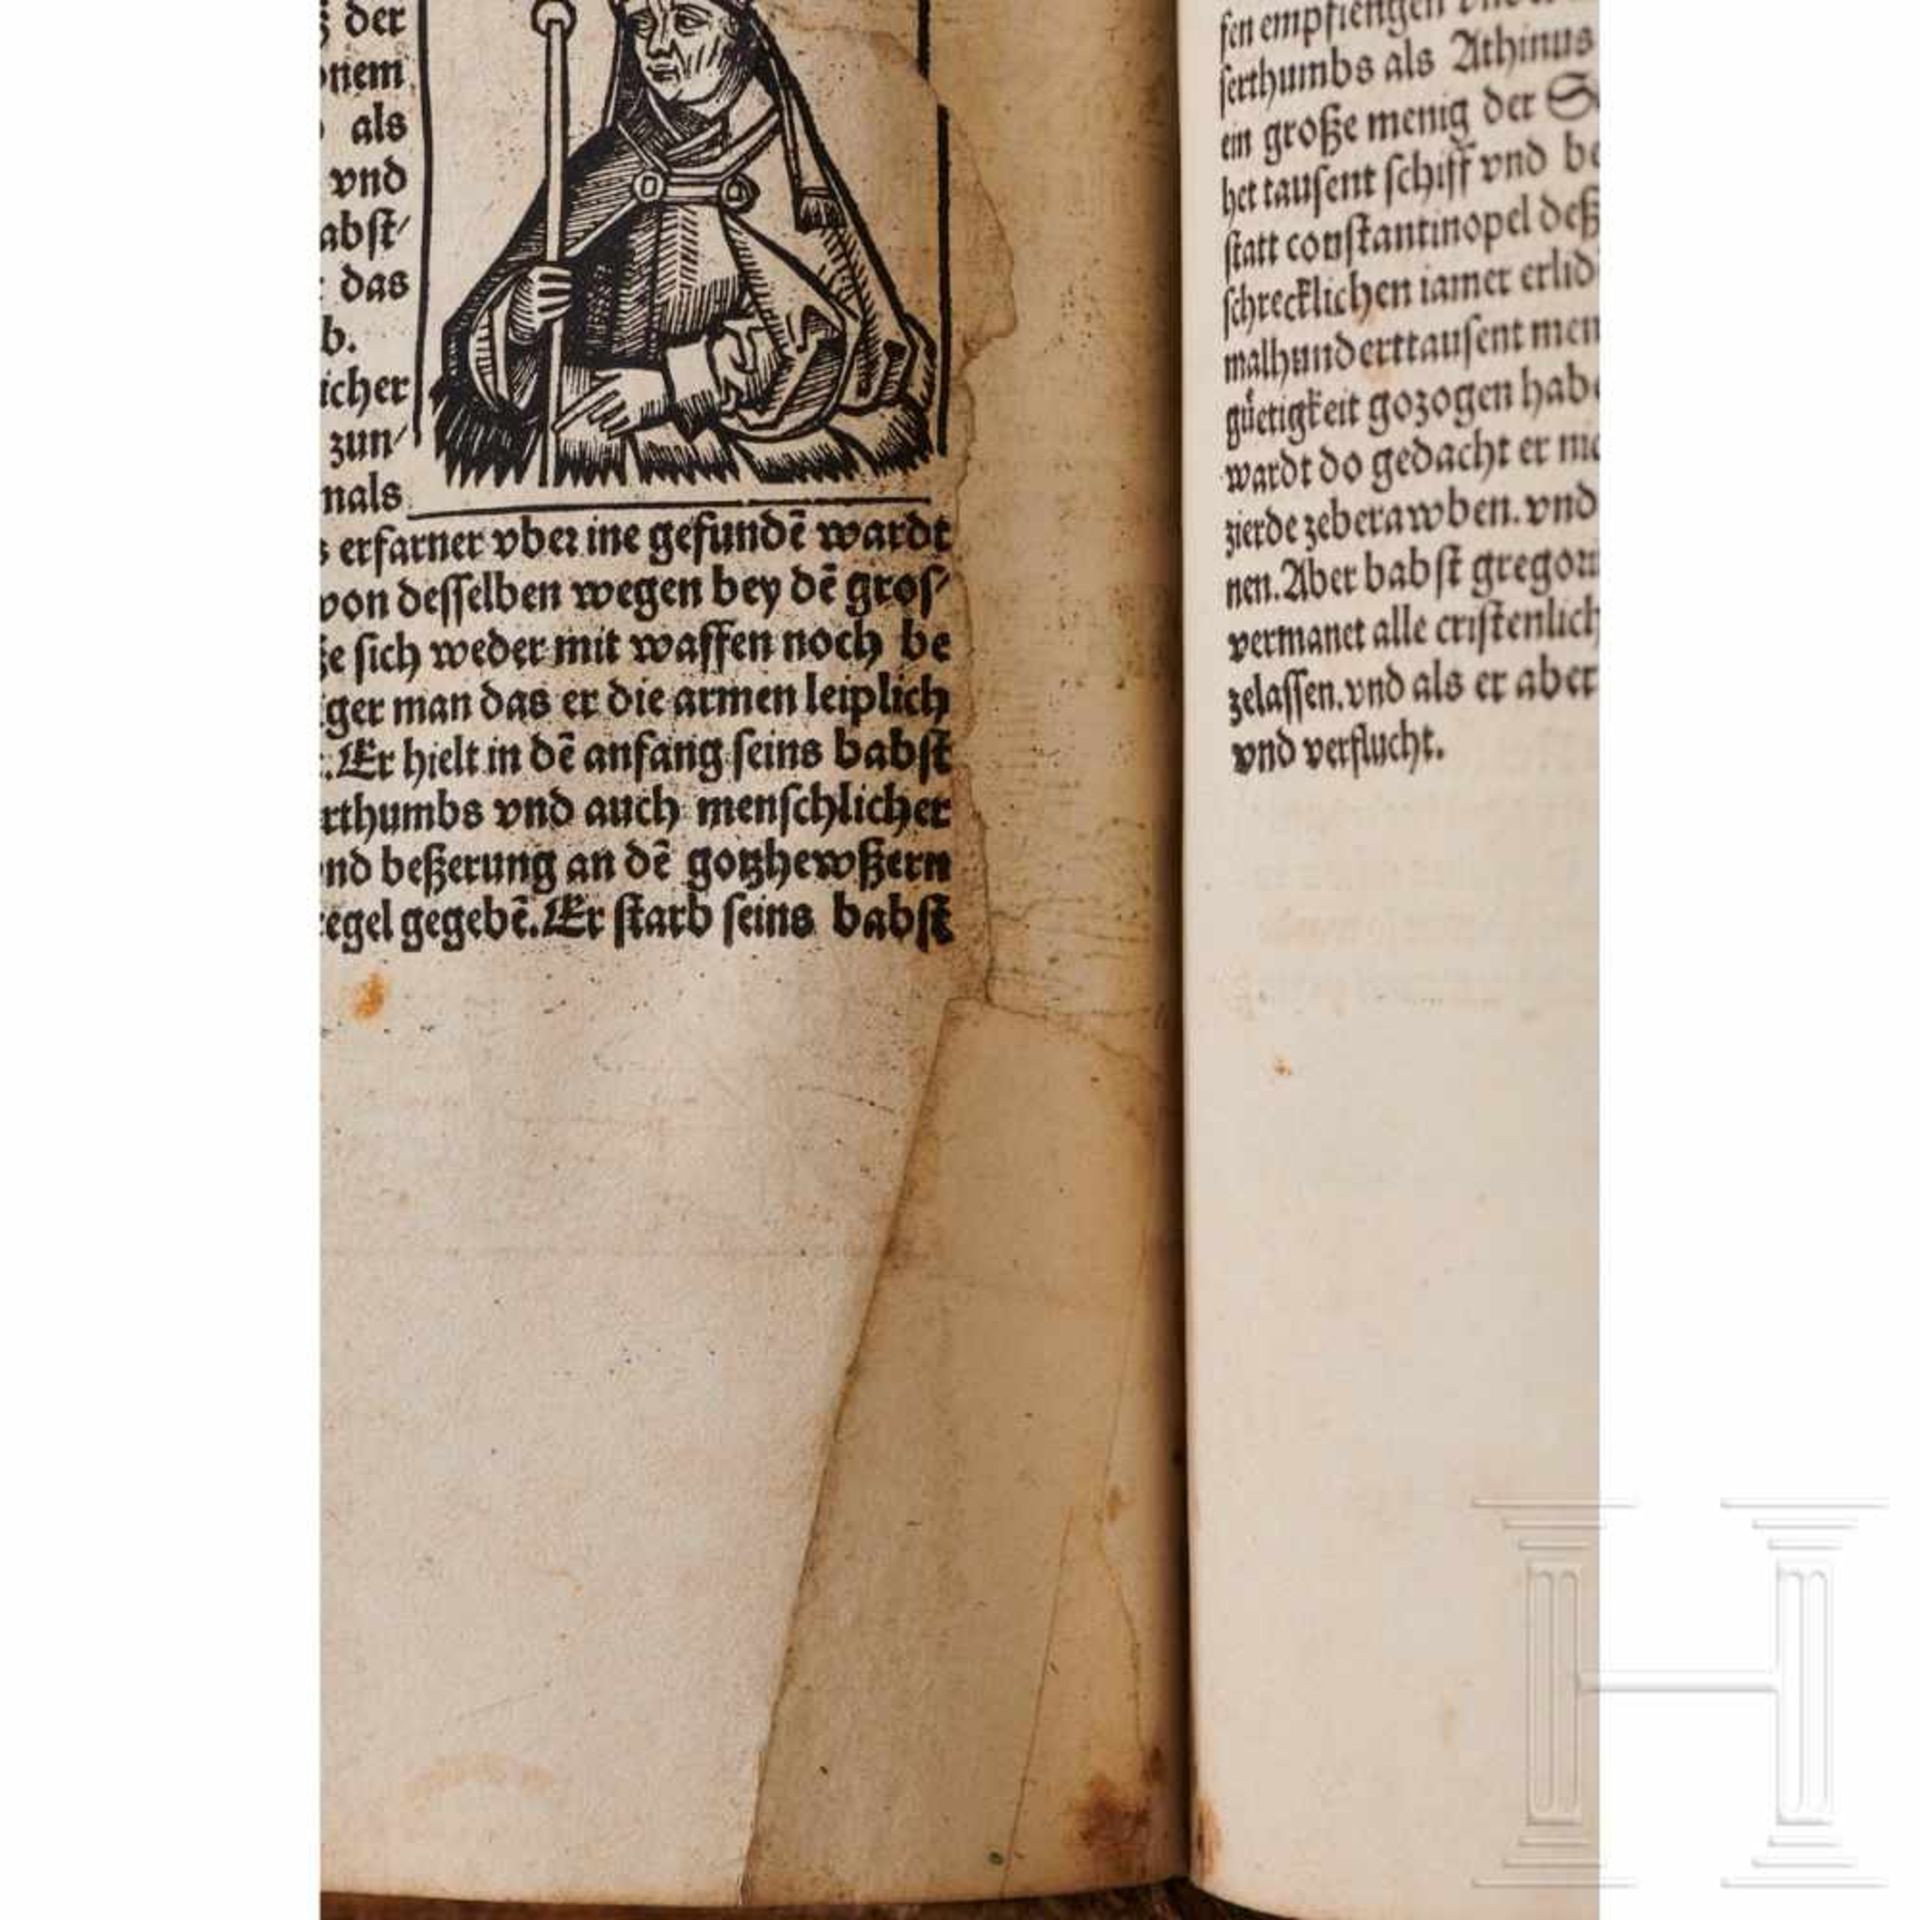 Hartmann Schedel, Das Buch der Chroniken, Nürnberg, A. Koberger, 1493 - Image 51 of 51